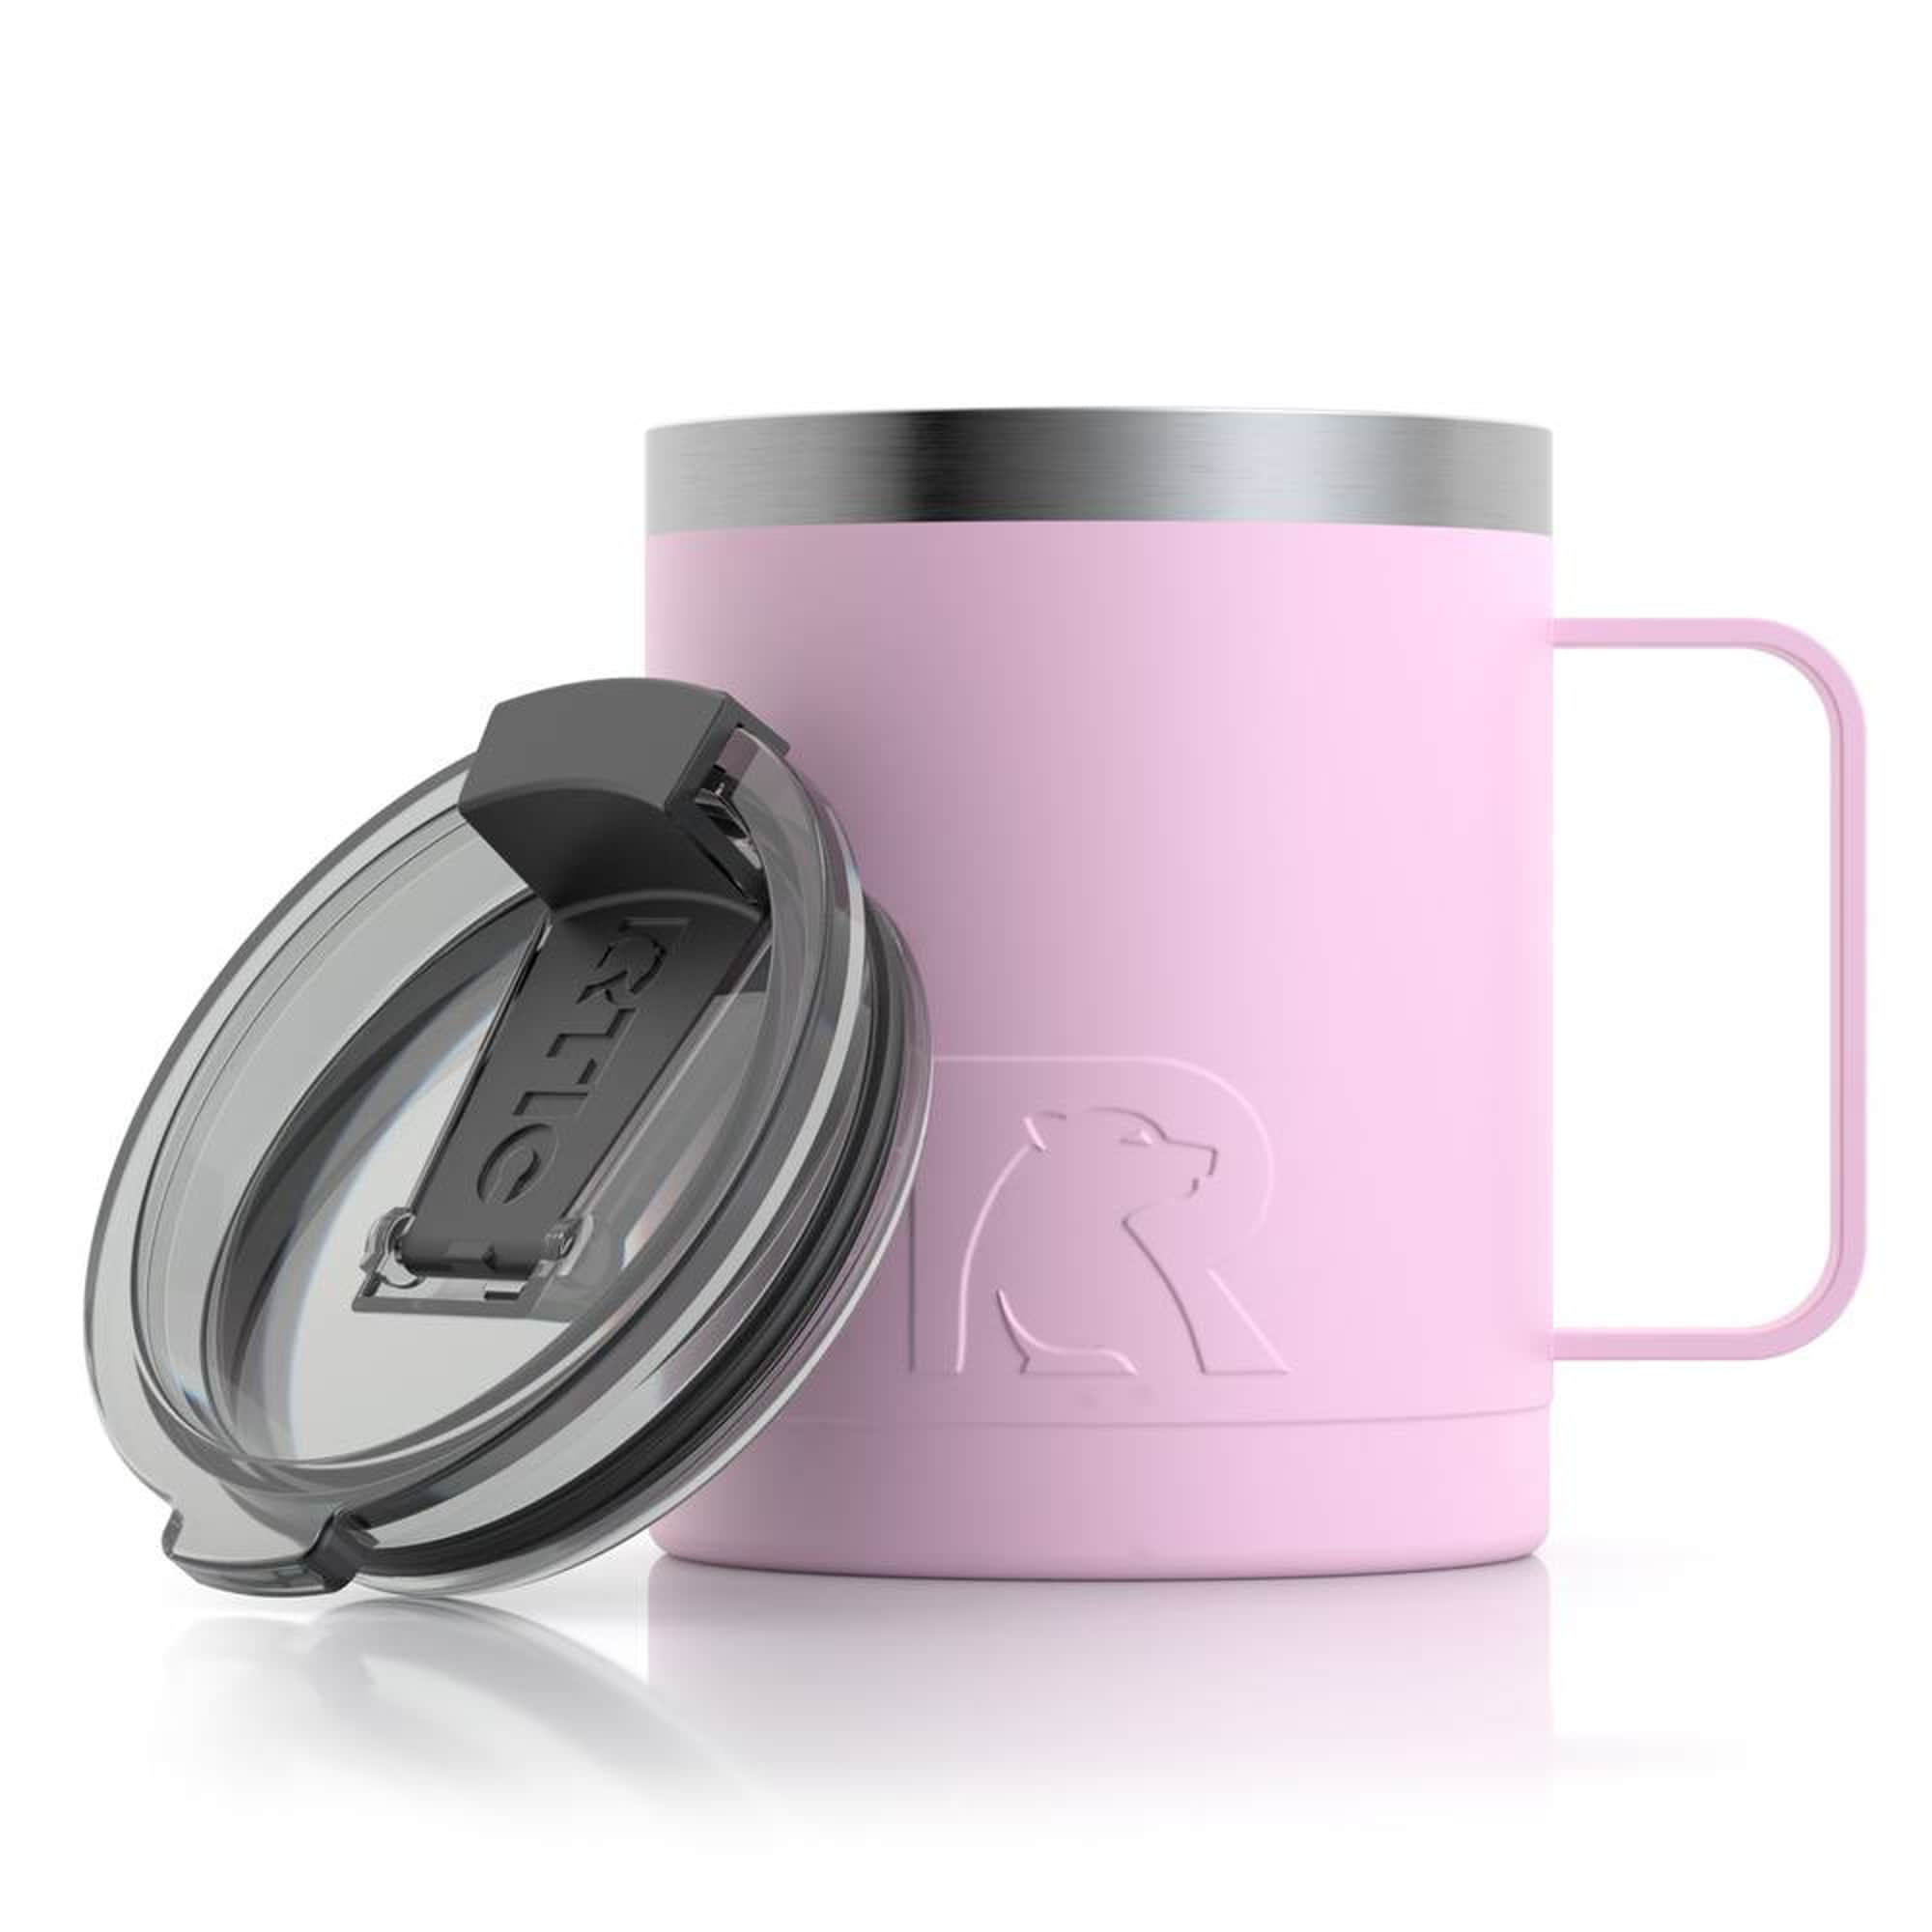 RTIC Travel Coffee Cup 16 oz Flamingo